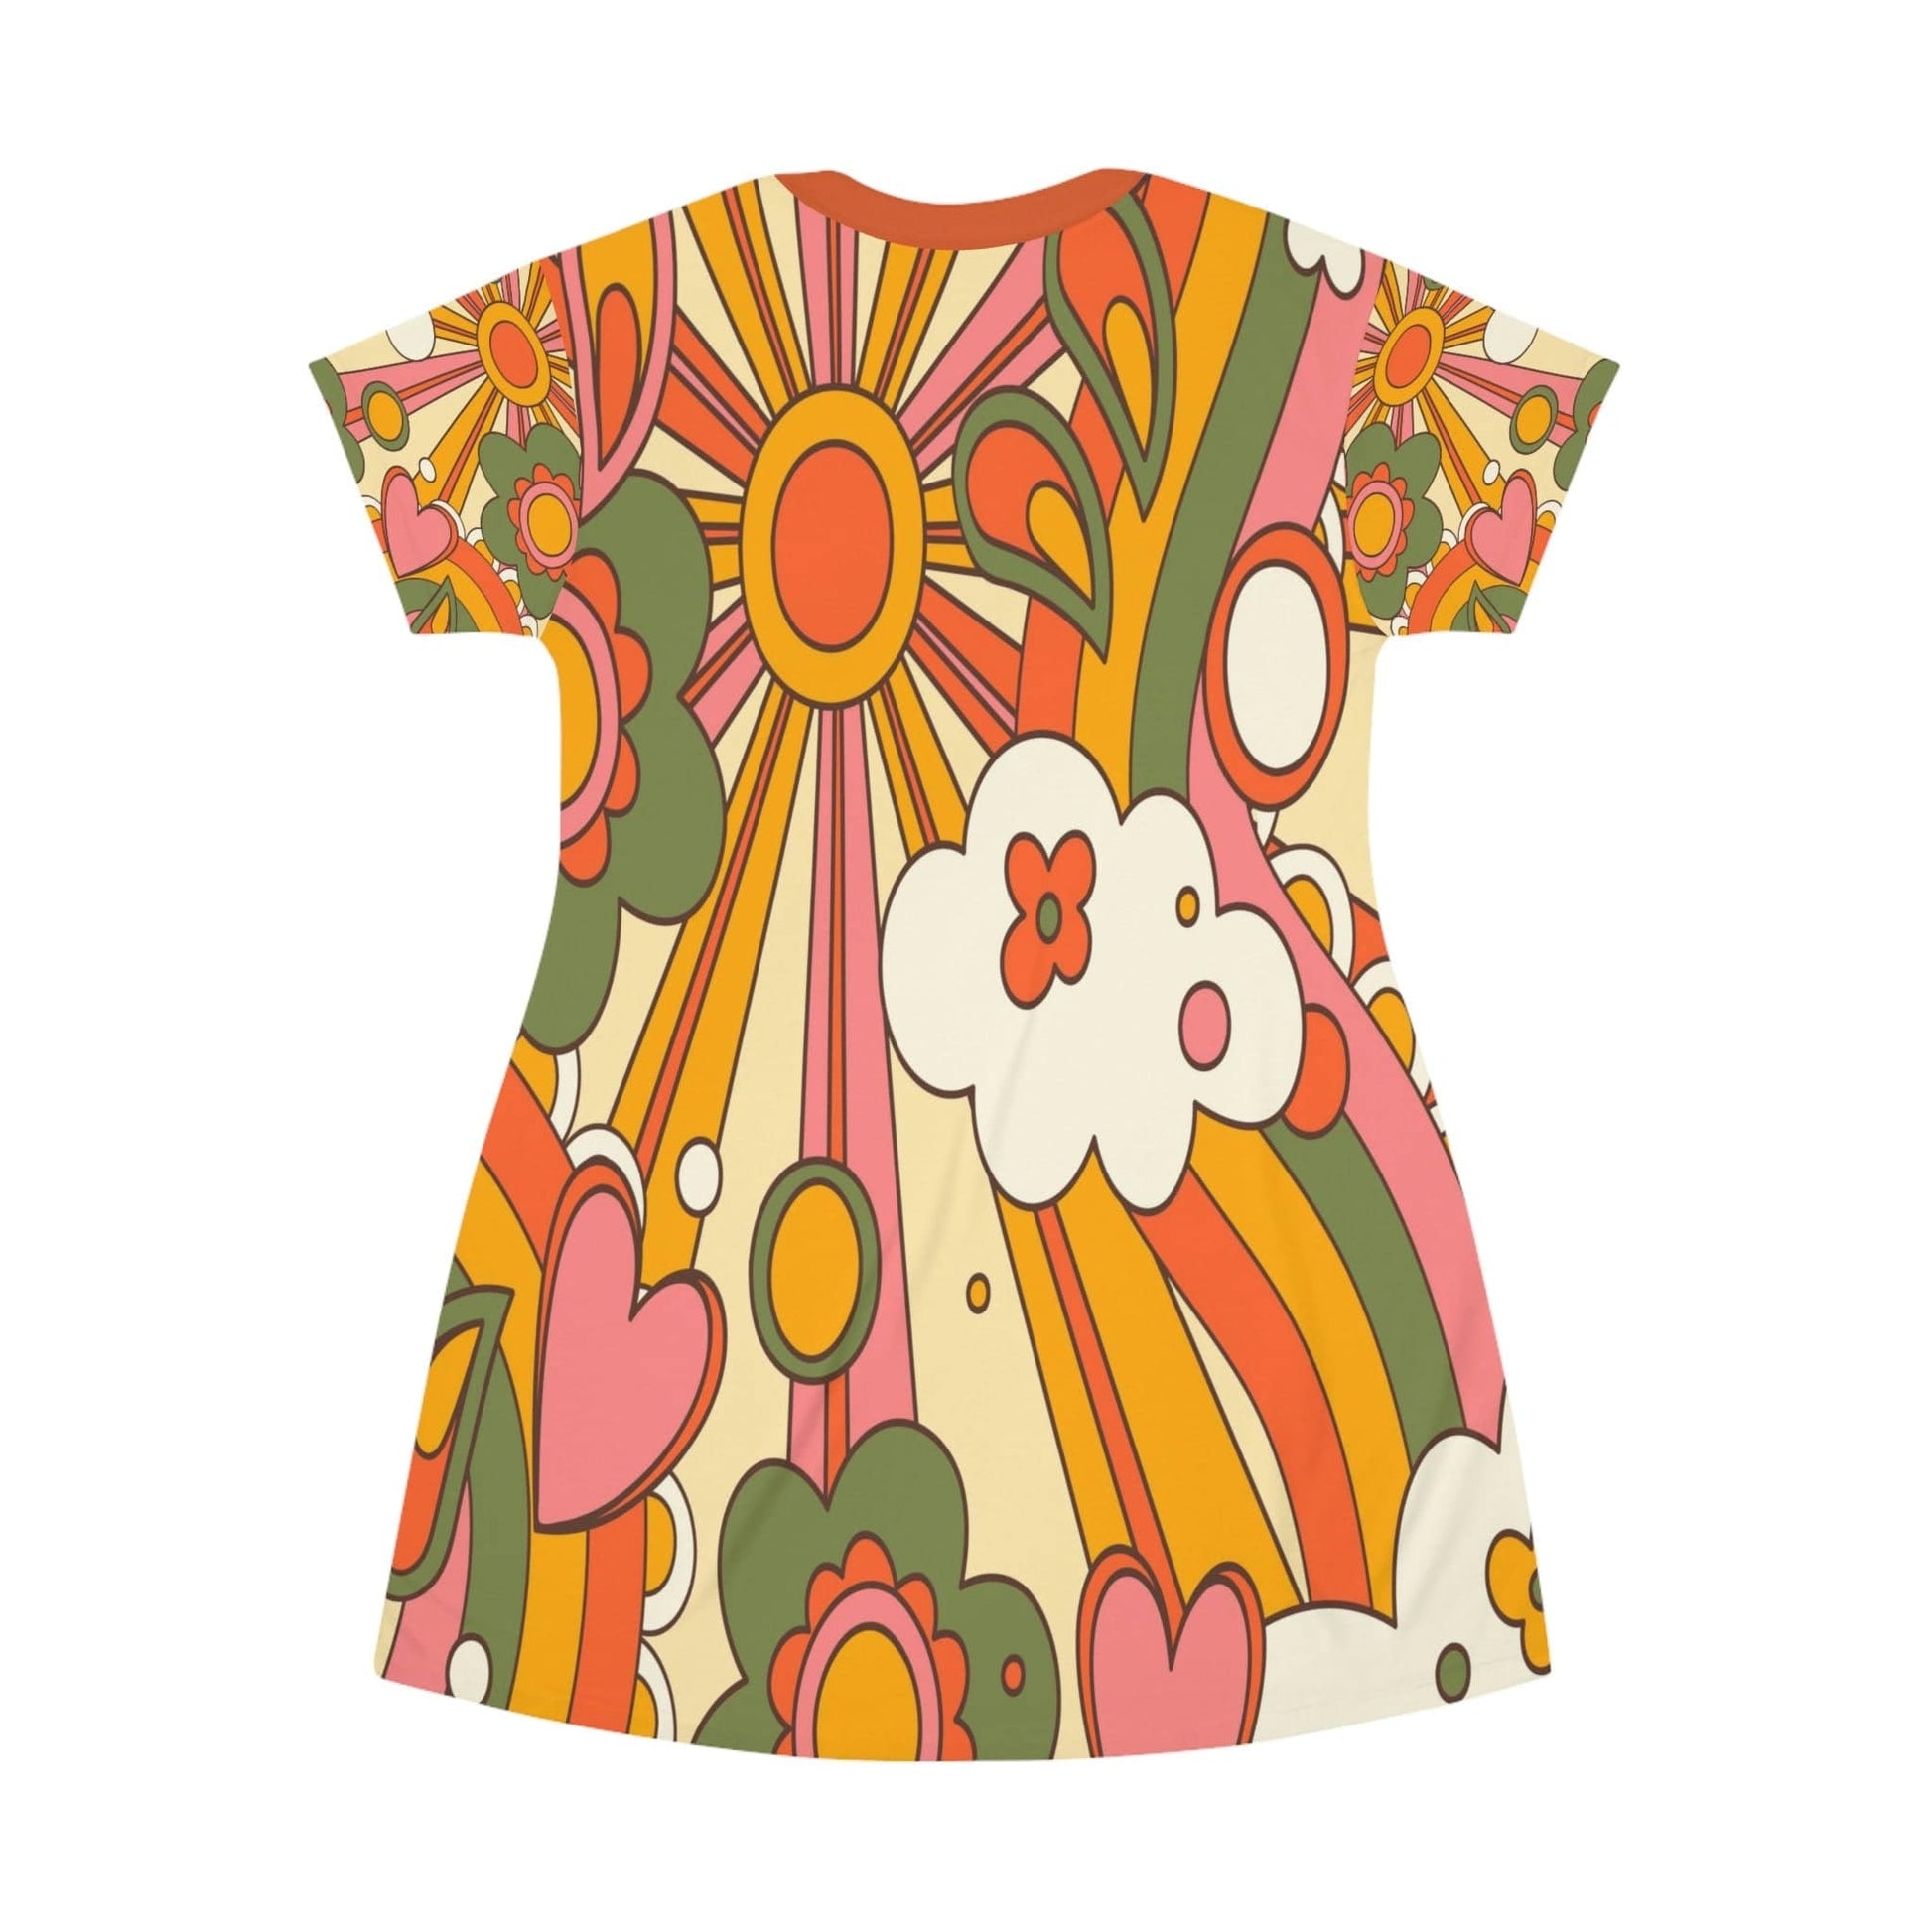 Retro Groovy Hippie 70s Sunburst T-Shirt Dress in Mid Century